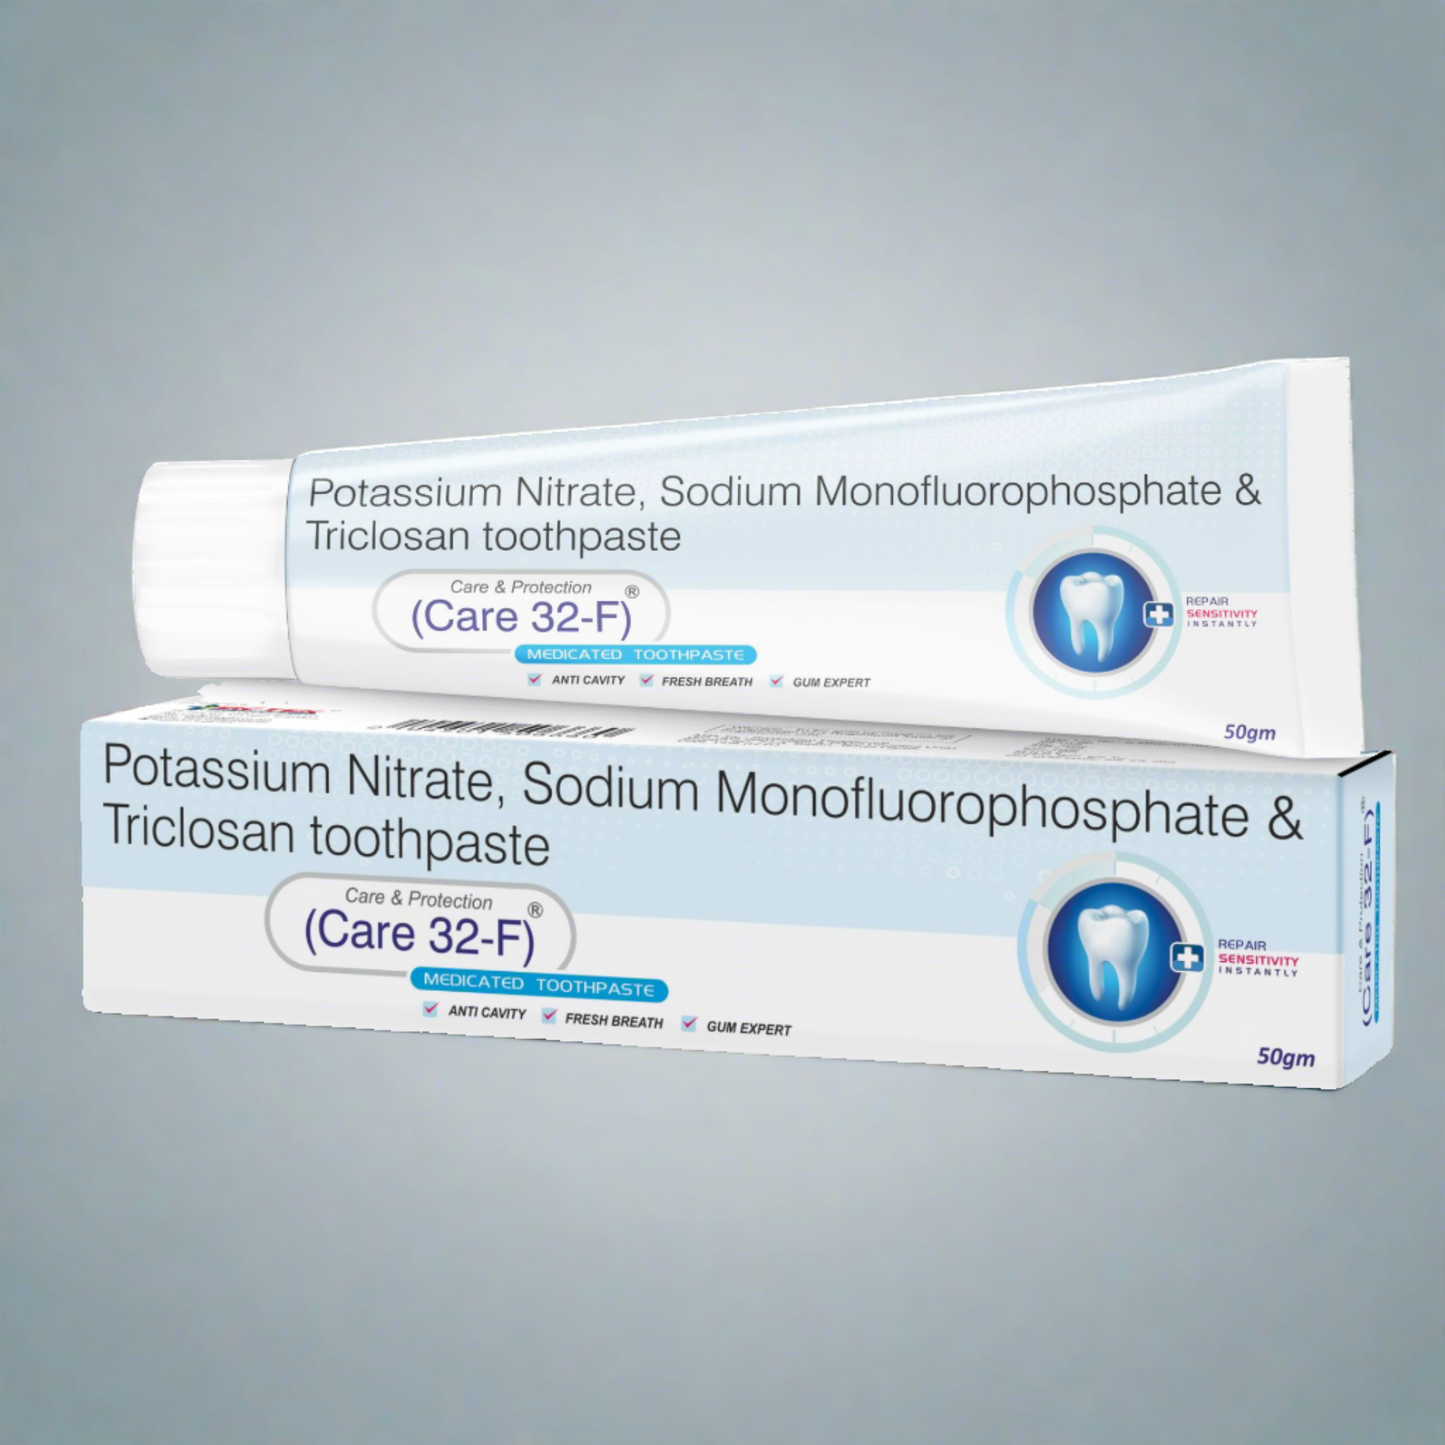 potassium nitrate & sodium monofluorophosphate toothpaste